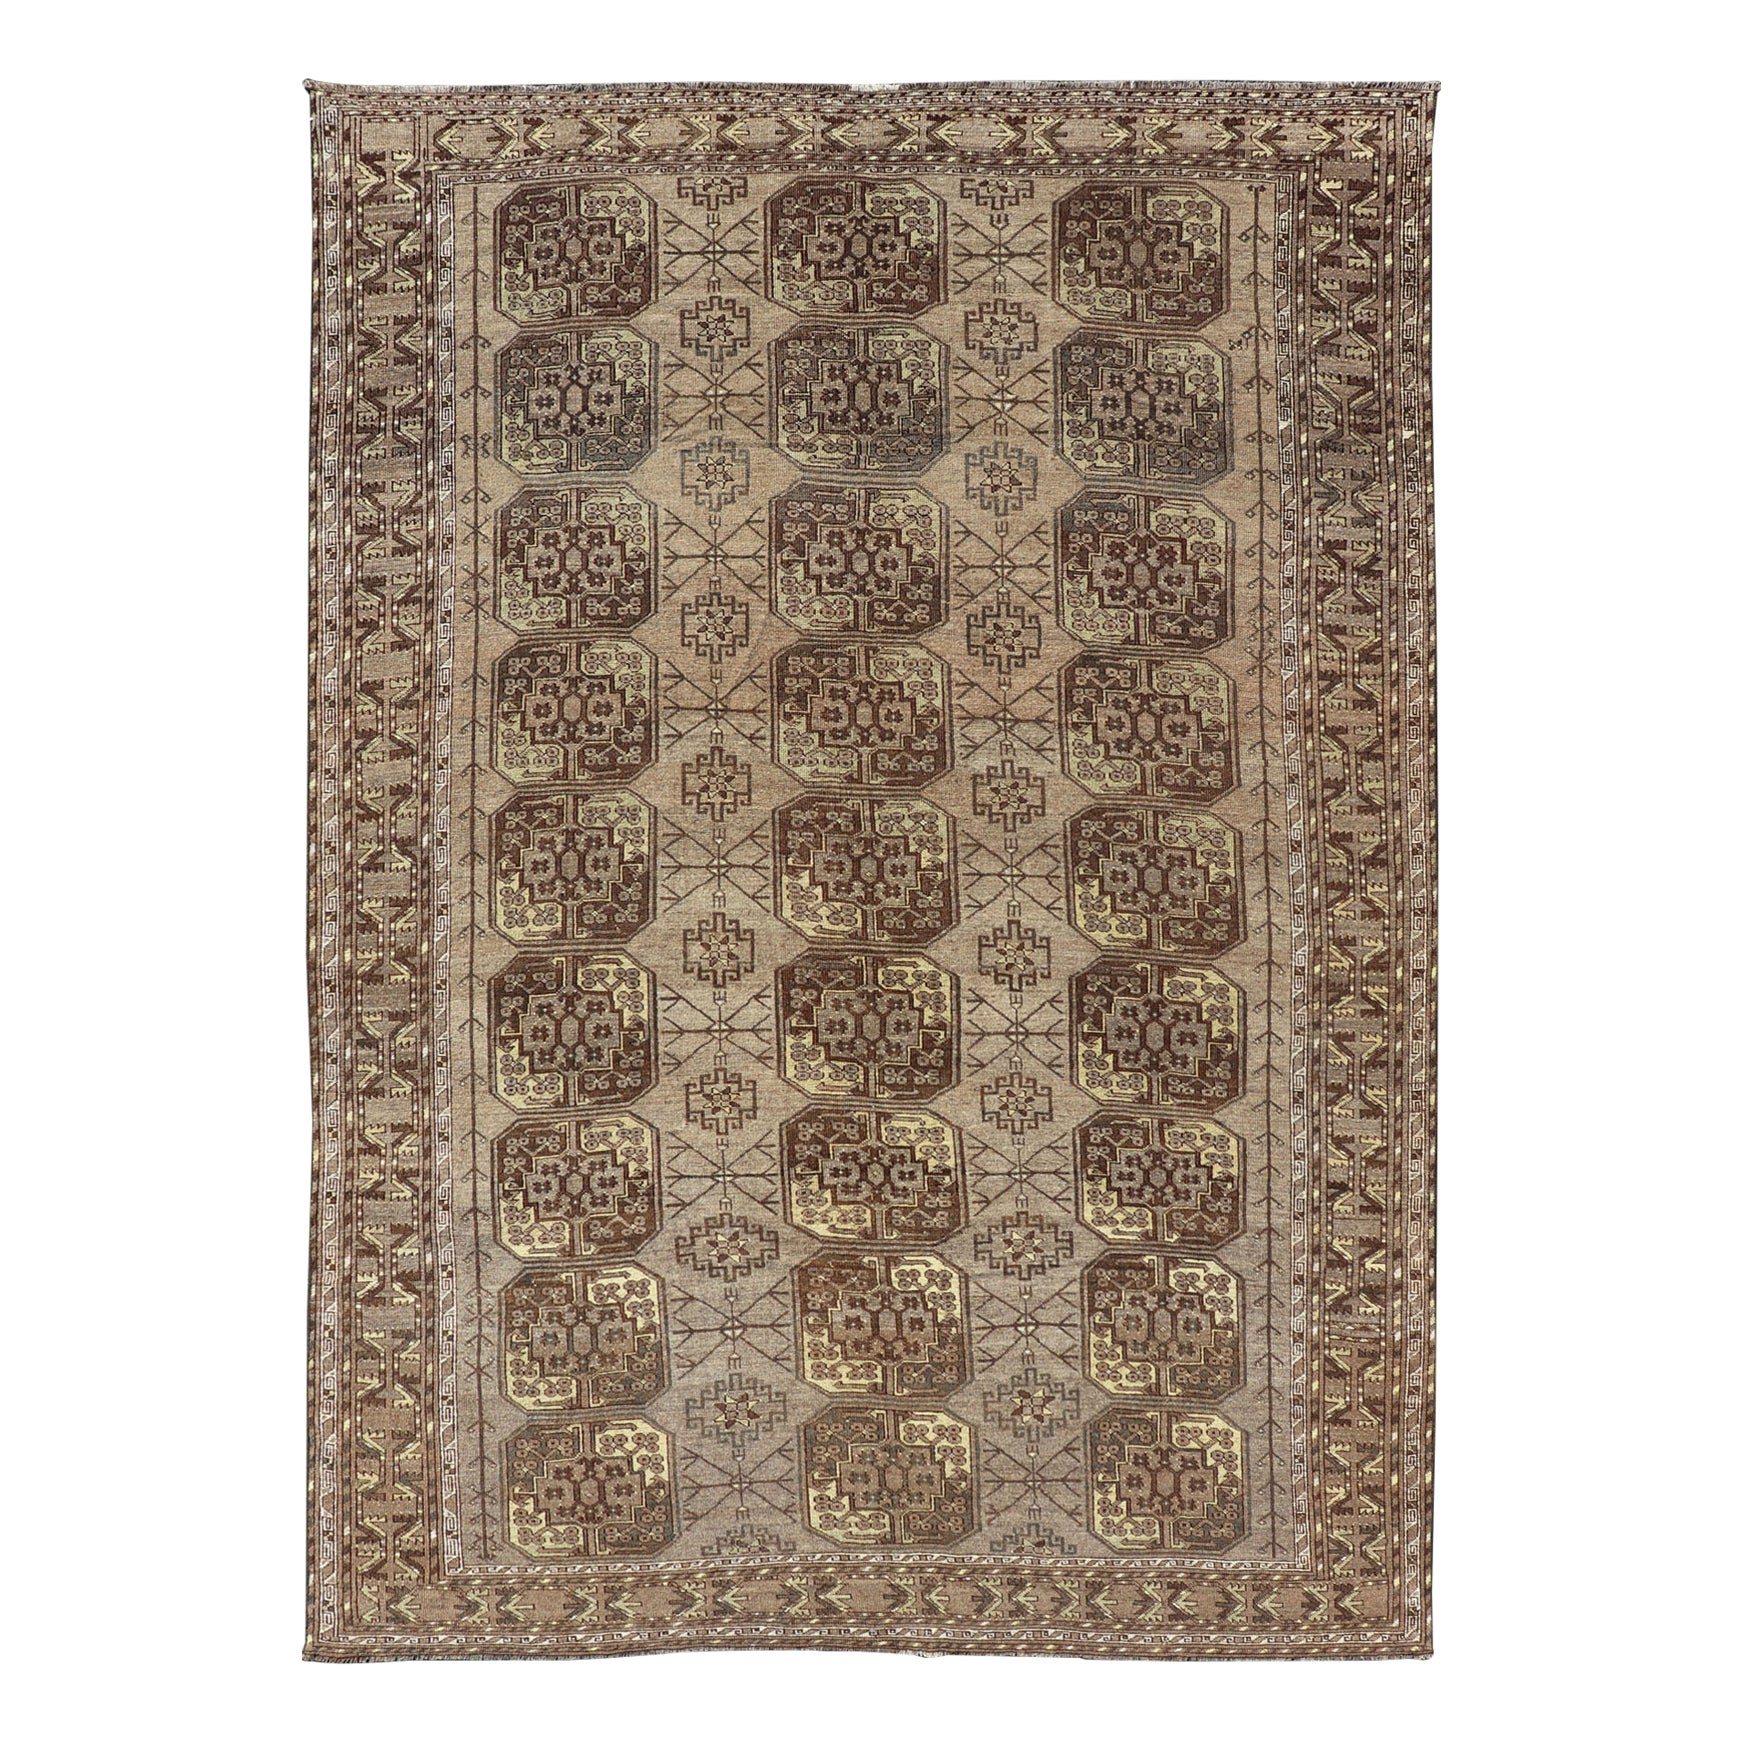 Hand-Knotted Turkomen Ersari Rug in Wool with Repeating Sub-Geometric Gul Design